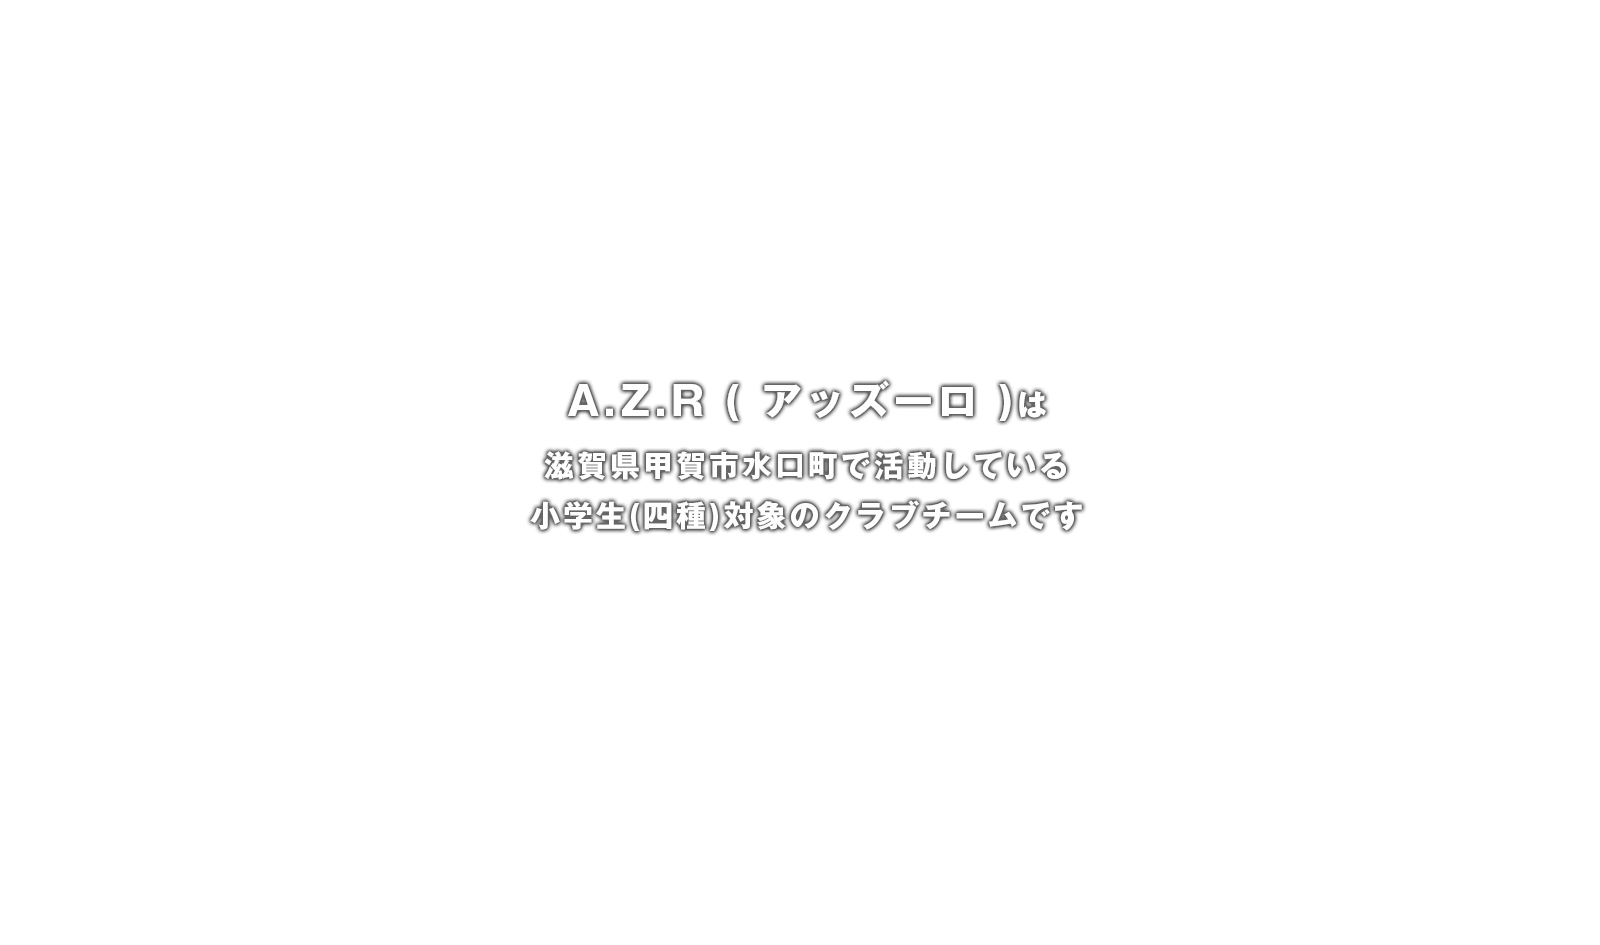 A.Z.R(アッズーロ)は滋賀県甲賀市水口町で活動している小学生(四種)対象のクラブチームです